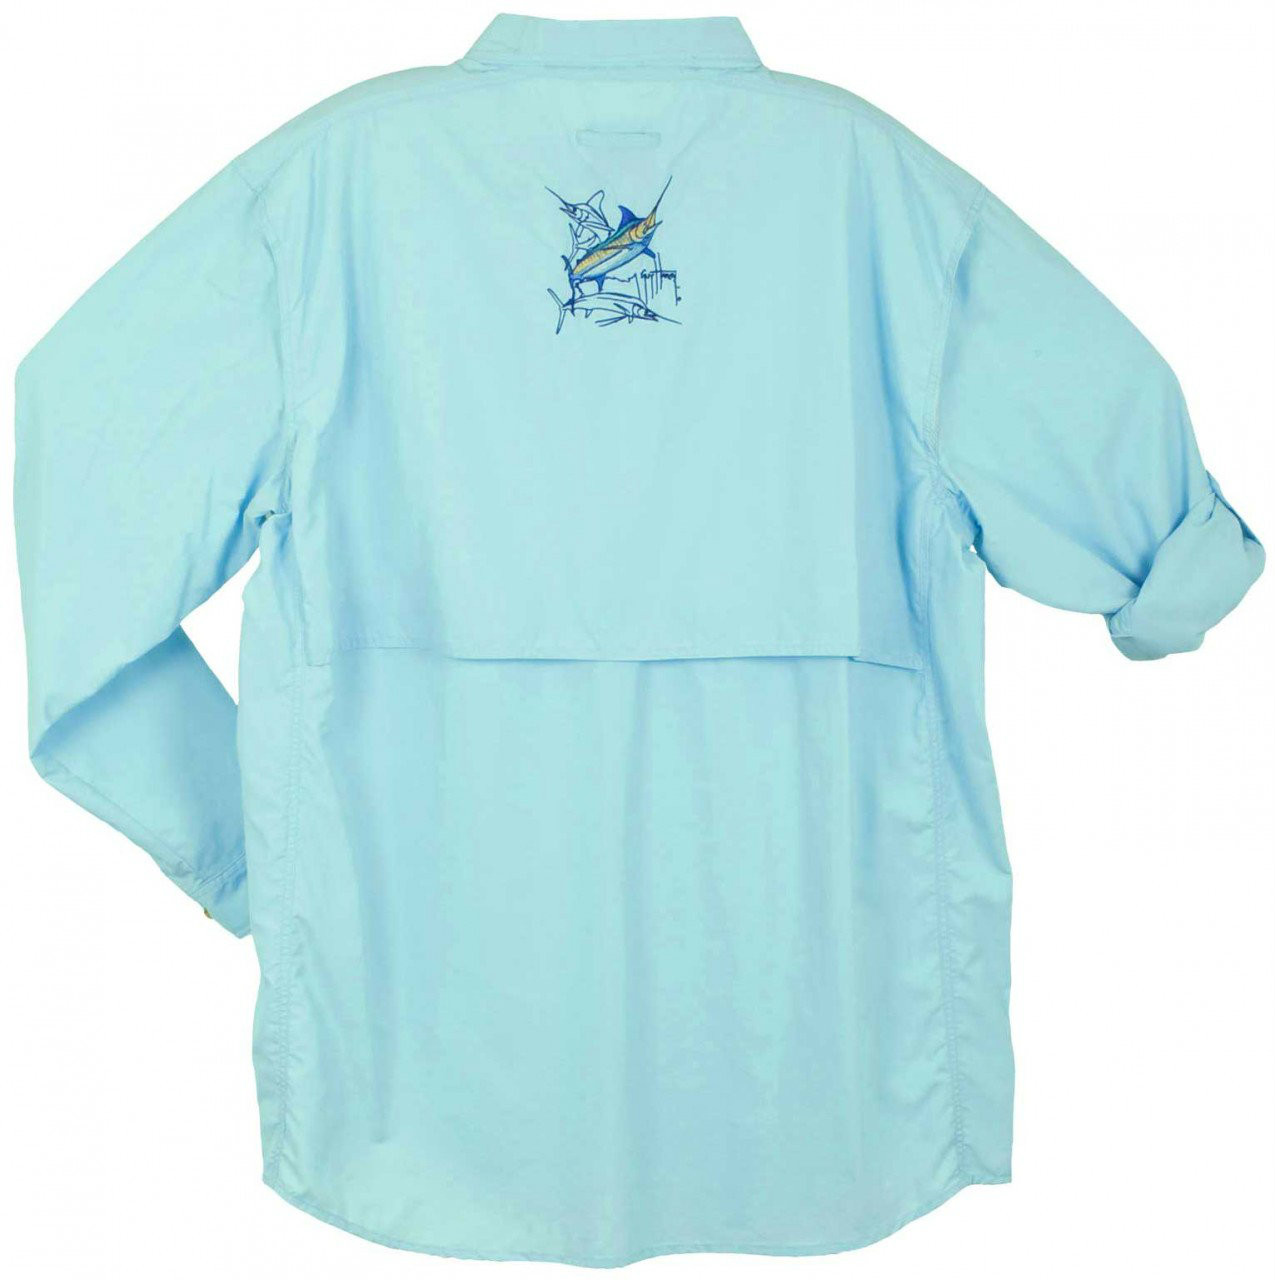 Tan and Blue Magellan Fishing Shirt